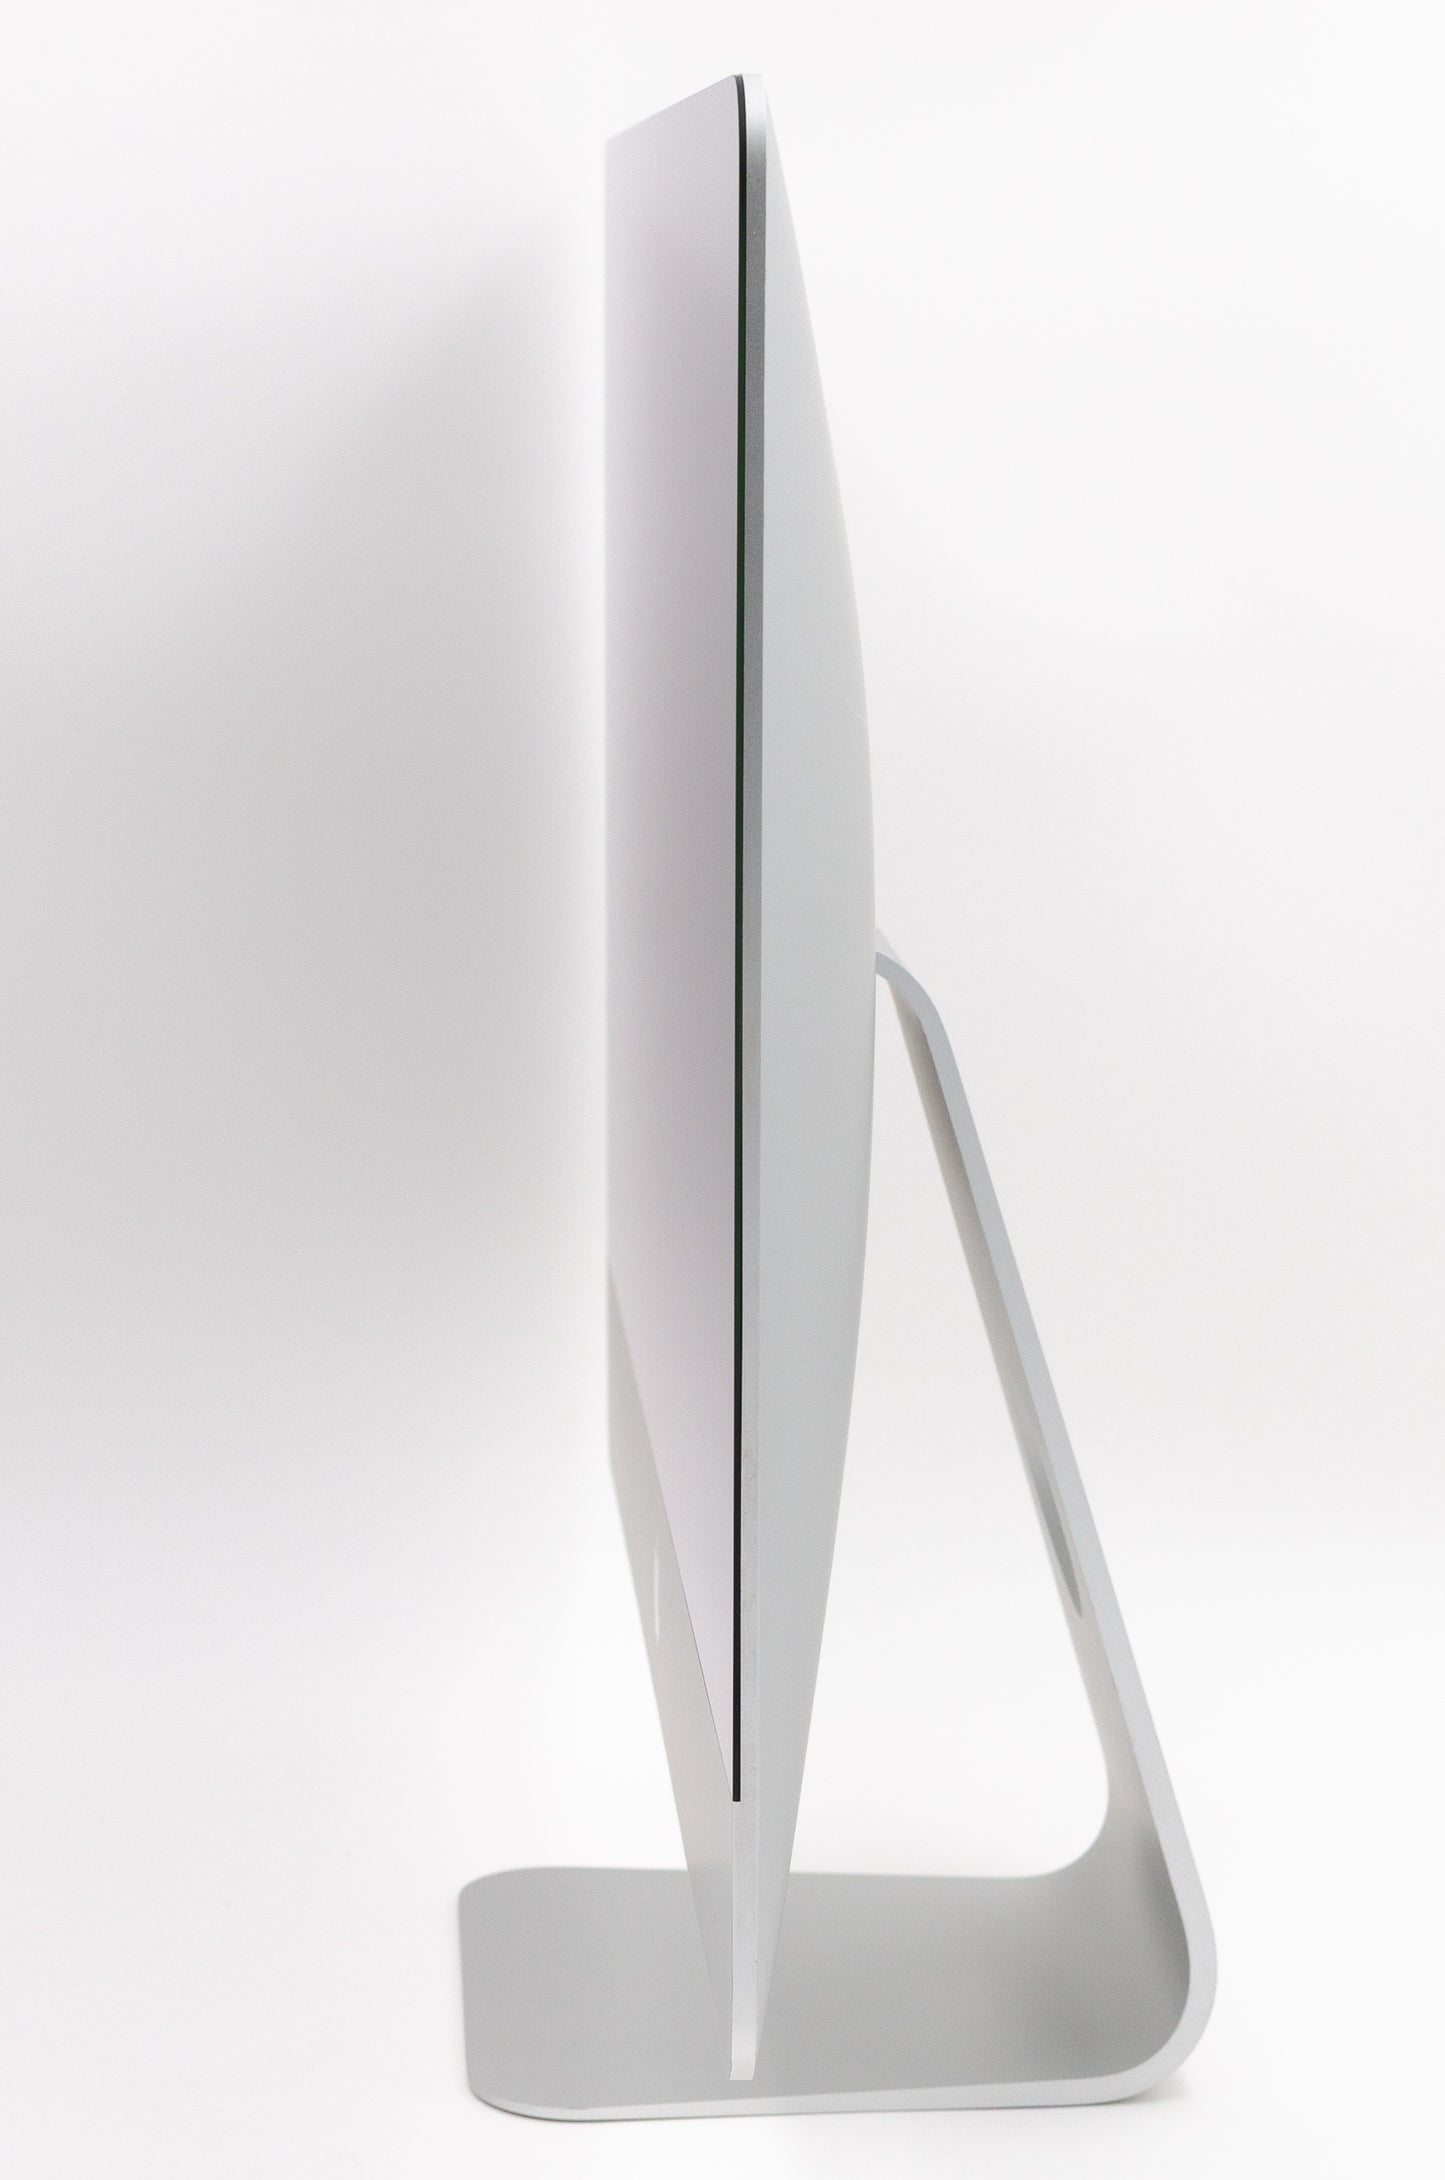 apple-mid-2014-21.5-inch-imac-ultra-thin-a1418-aluminum-dci5 - 1.4ghz, 8gb ram, pro 5000 - 1.5gb gpu-3